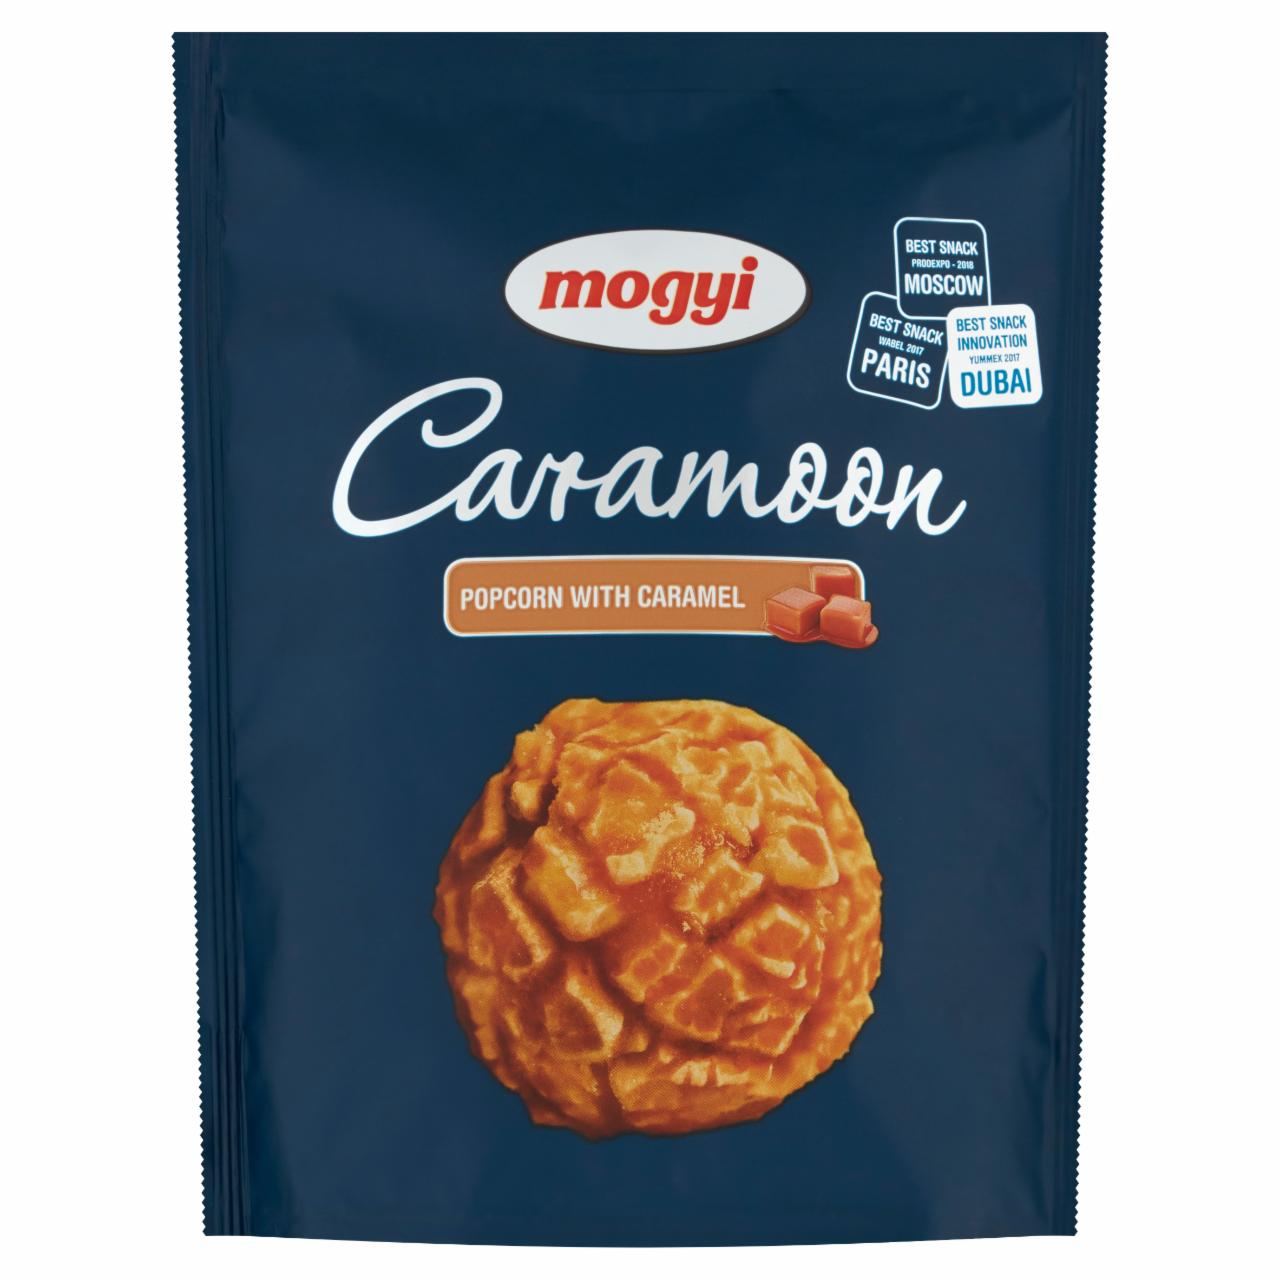 Zdjęcia - Caramoon Popcorn with Caramel Mogyi